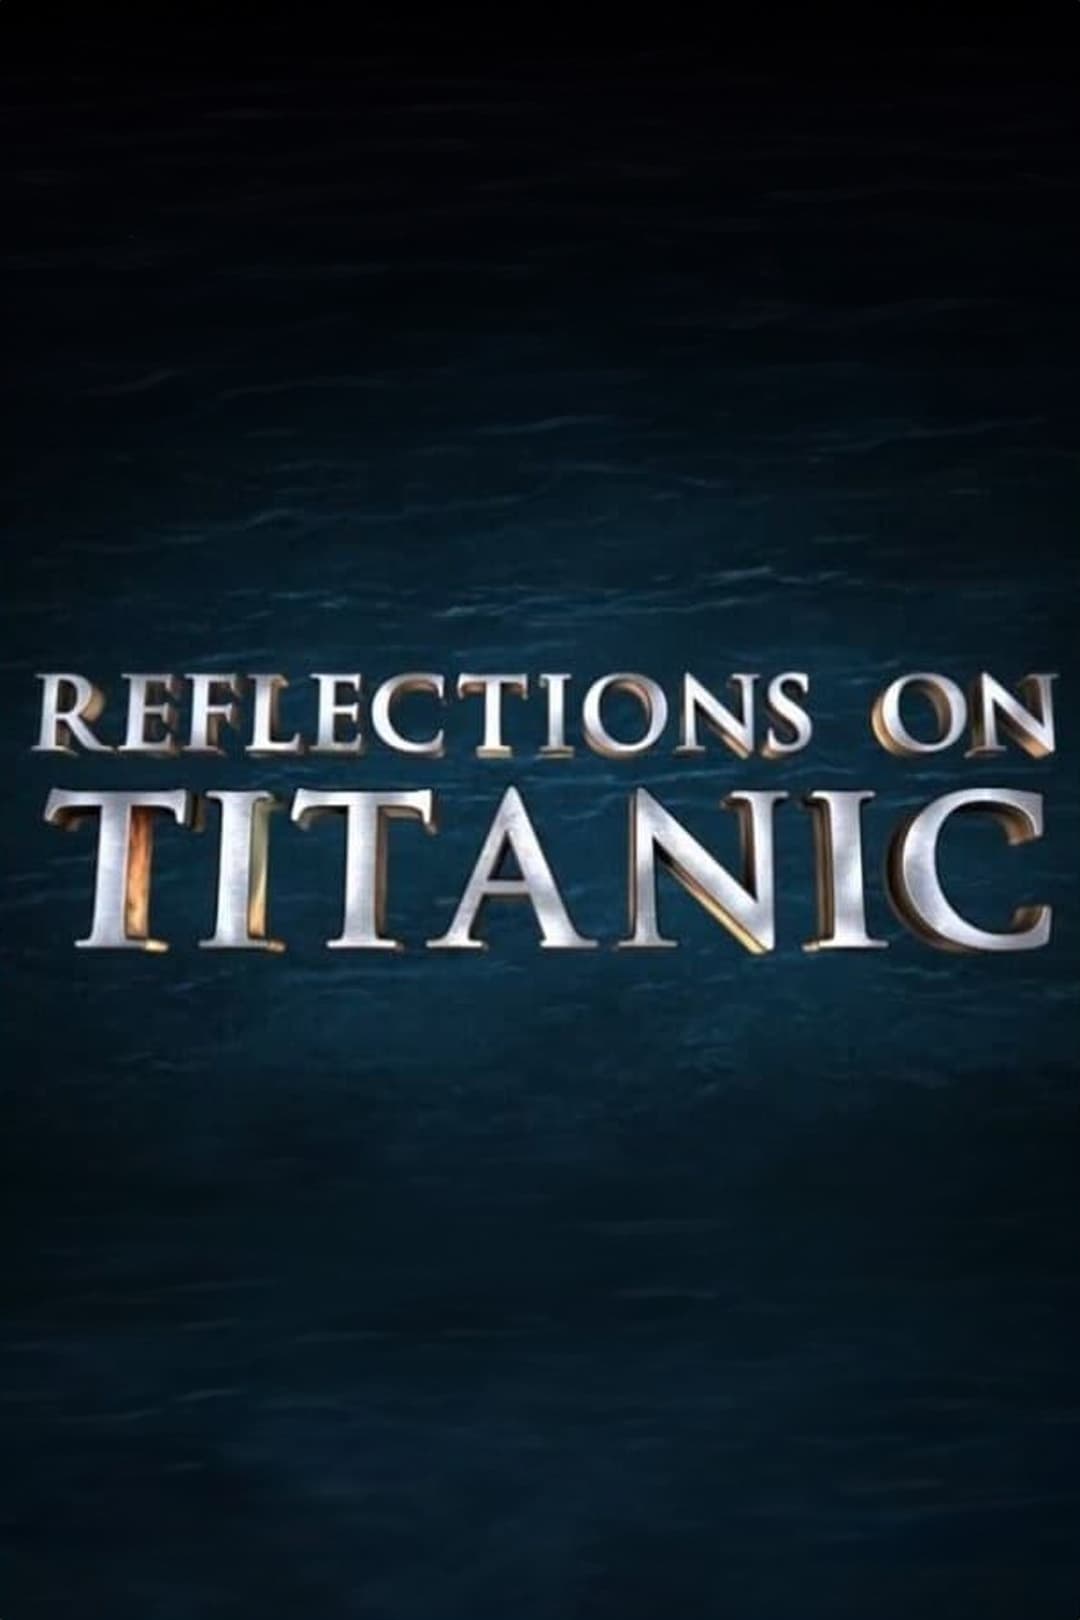 Reflections on Titanic (2012)